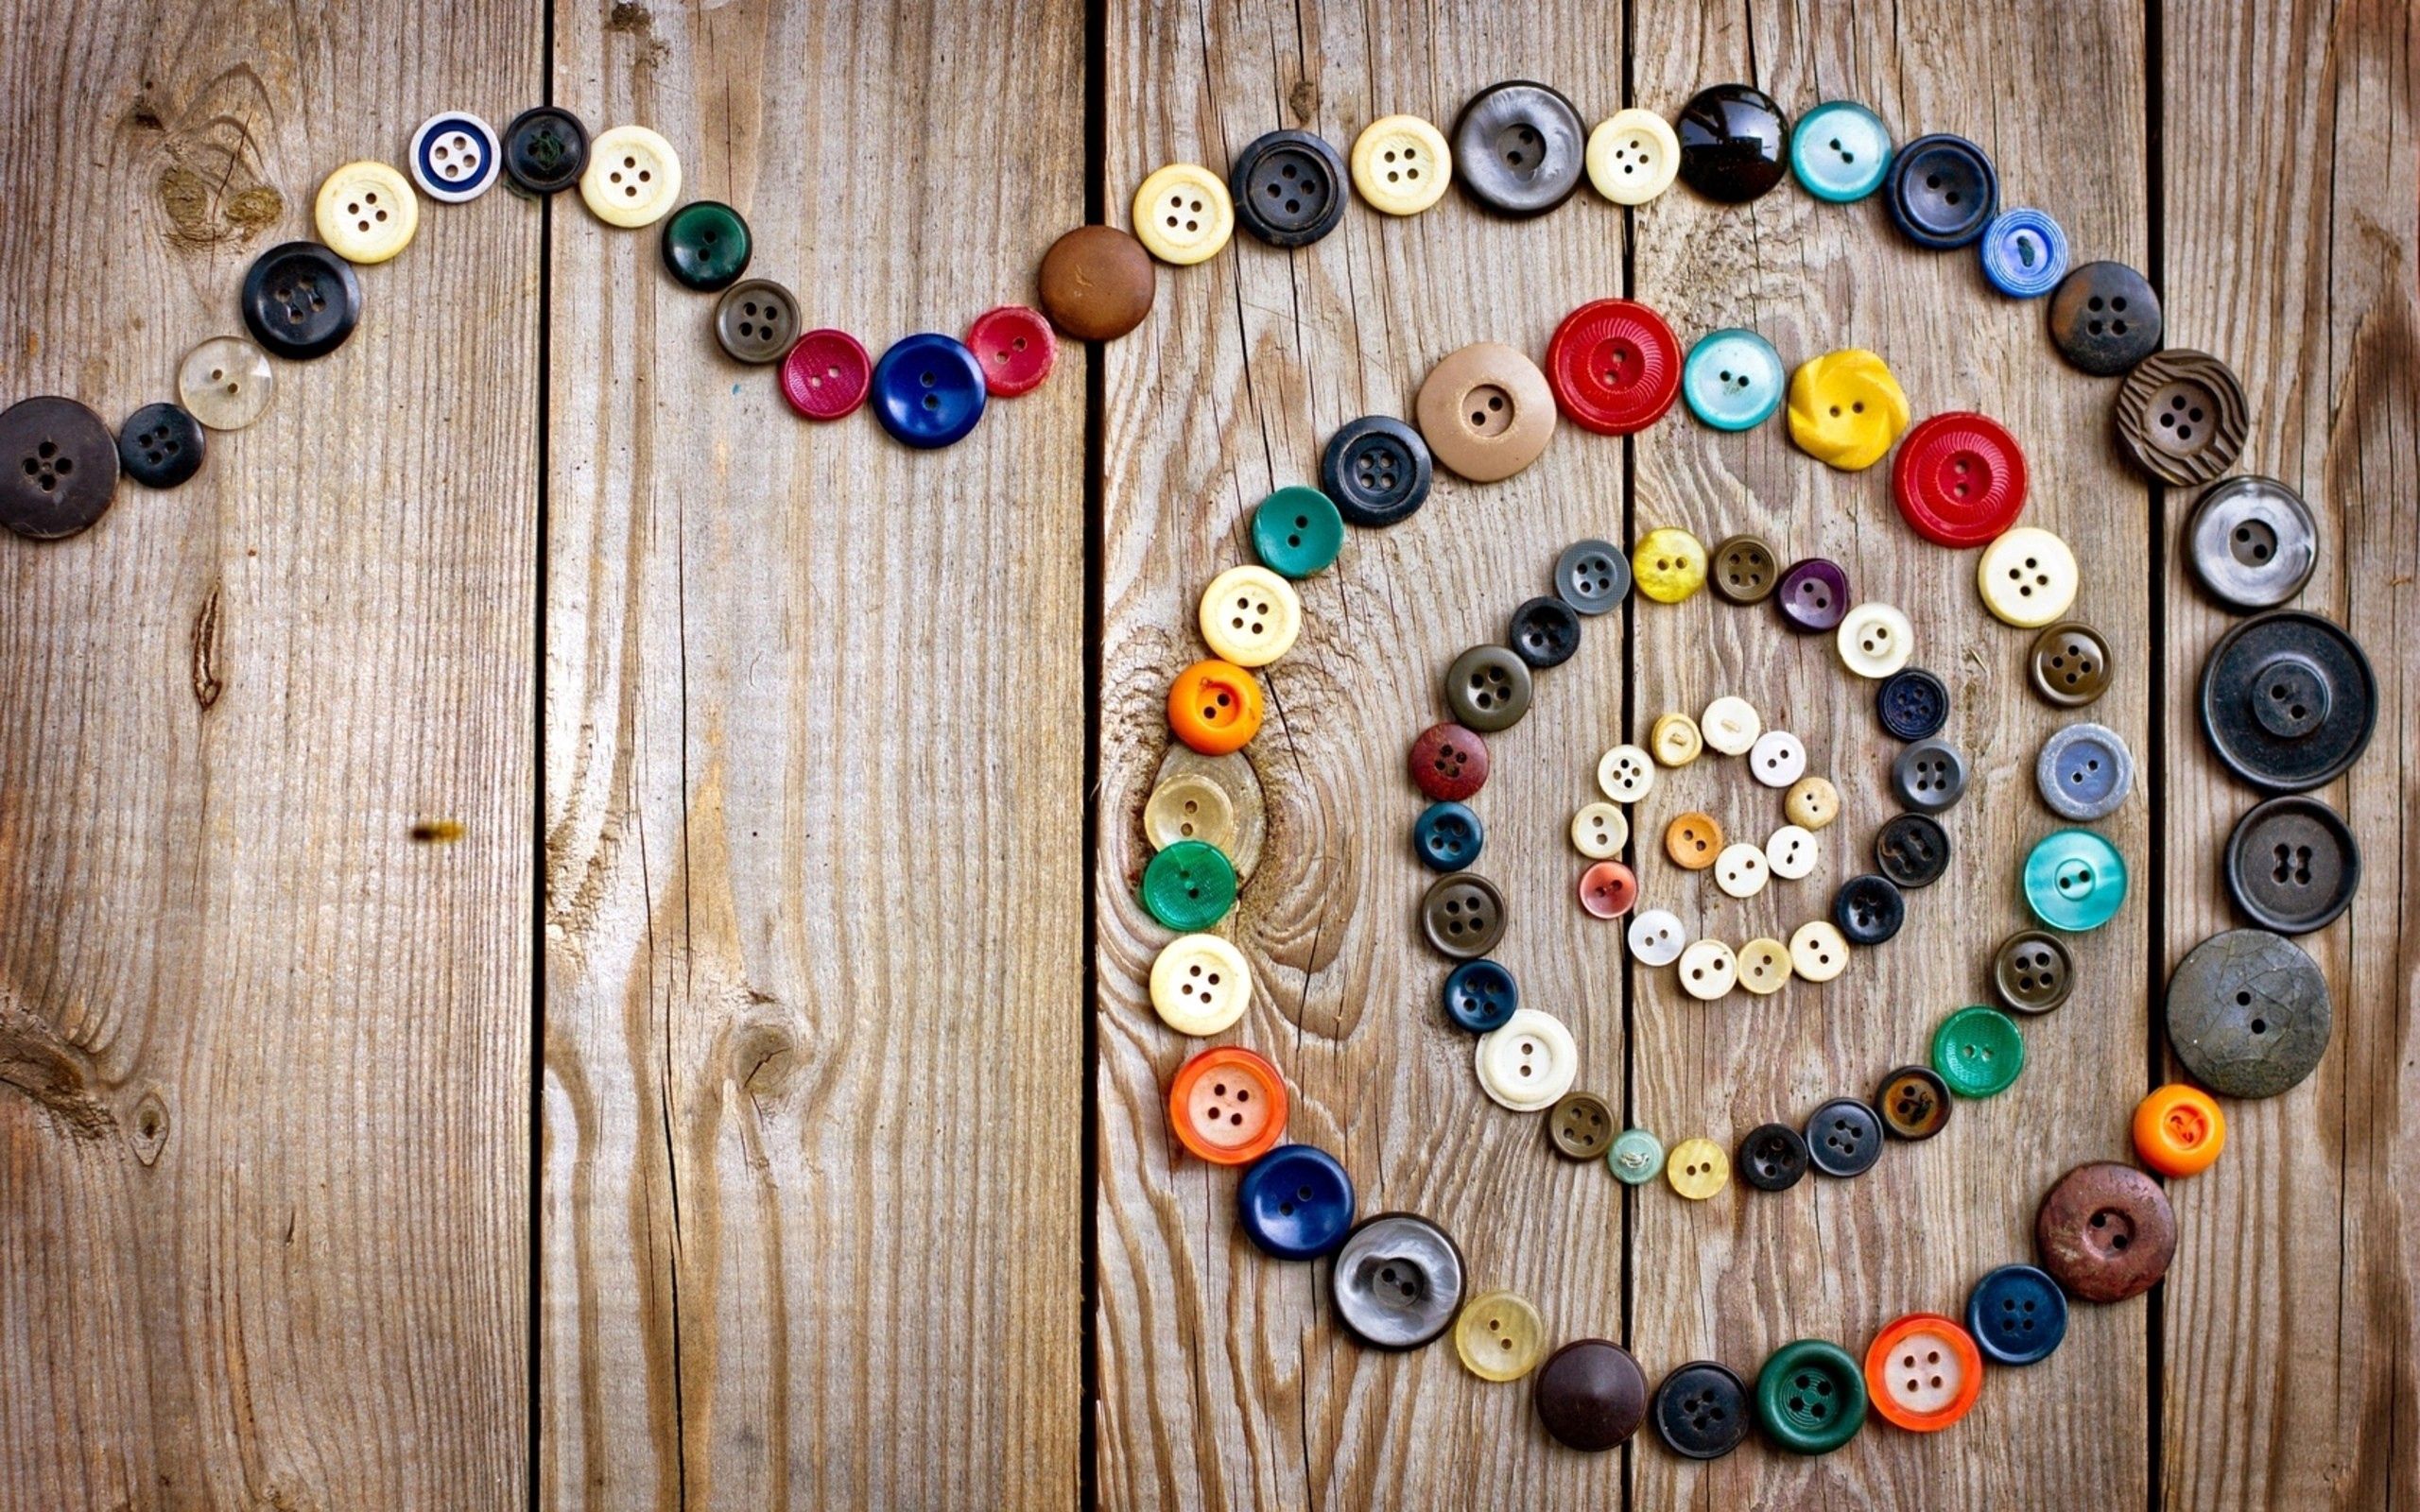 buttons, miscellanea, miscellaneous, multicolored, spiral, wooden floor